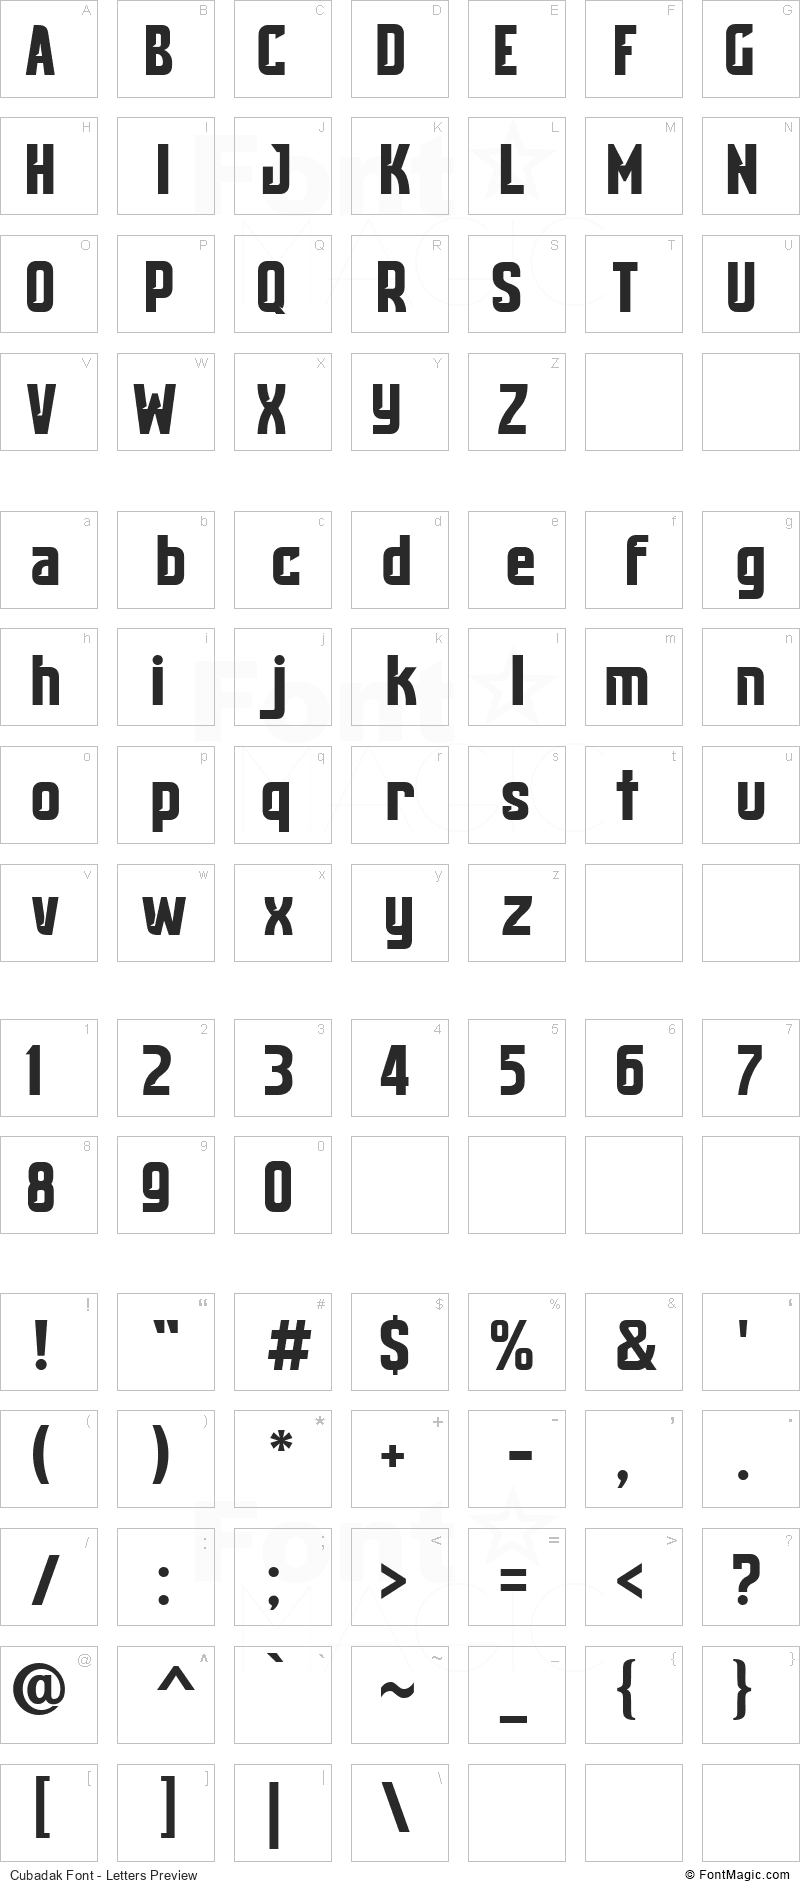 Cubadak Font - All Latters Preview Chart